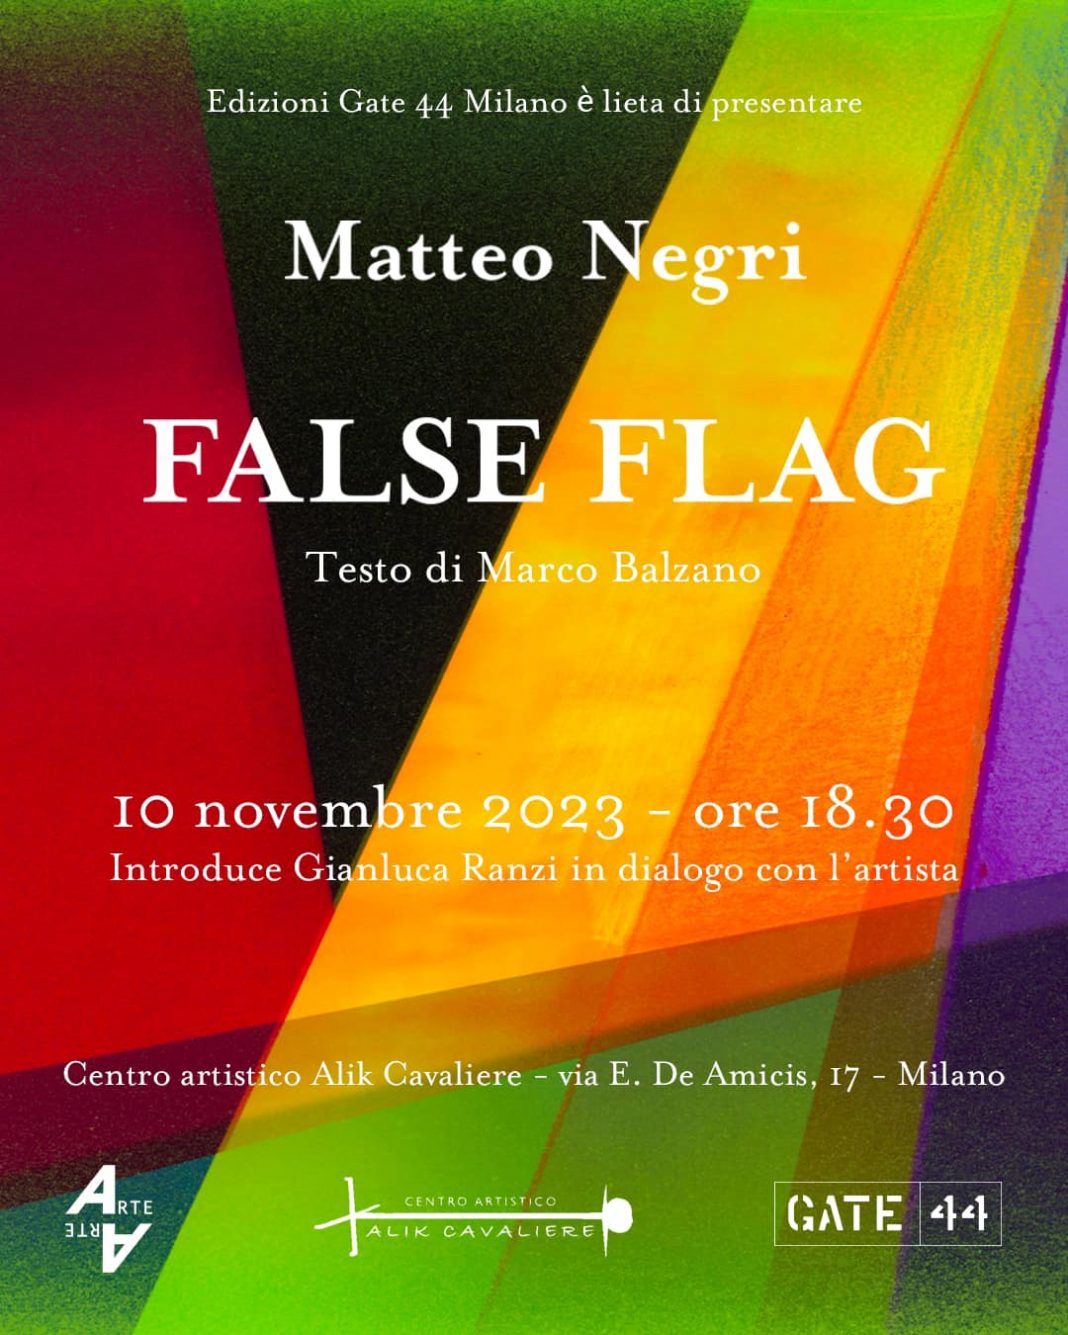 Matteo Negri – FALSE FLAGhttps://www.exibart.com/repository/media/formidable/11/img/d63/Negri-1068x1335.jpg